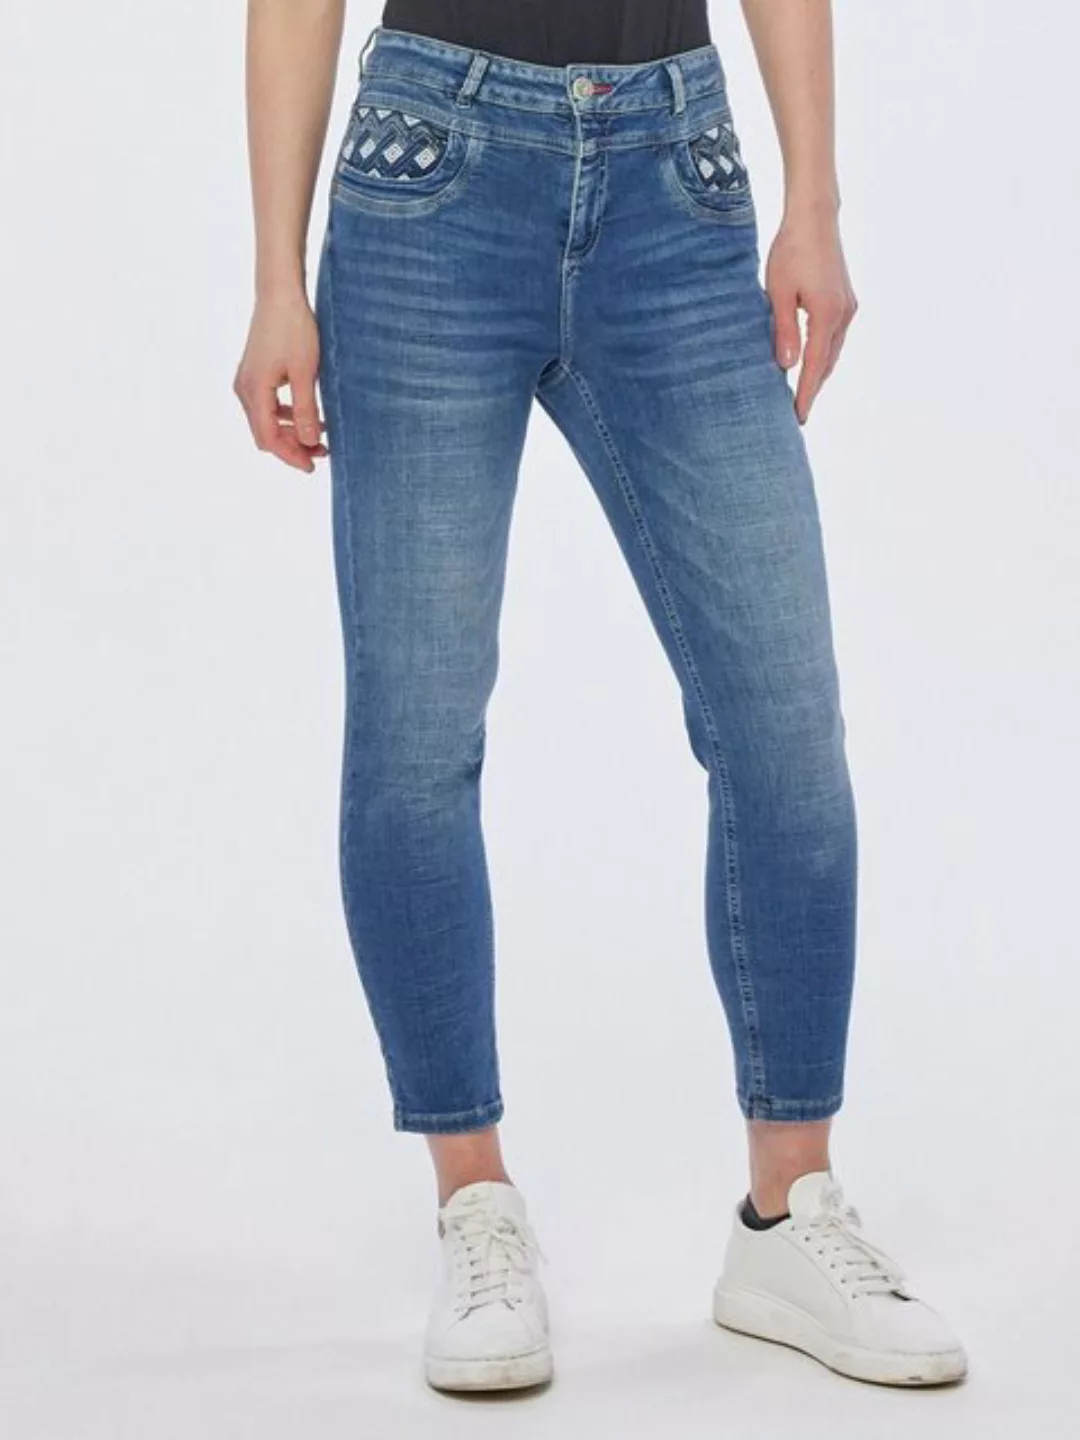 Christian Materne Skinny-fit-Jeans Denim-Hose koerpernah mit figurbetonter günstig online kaufen